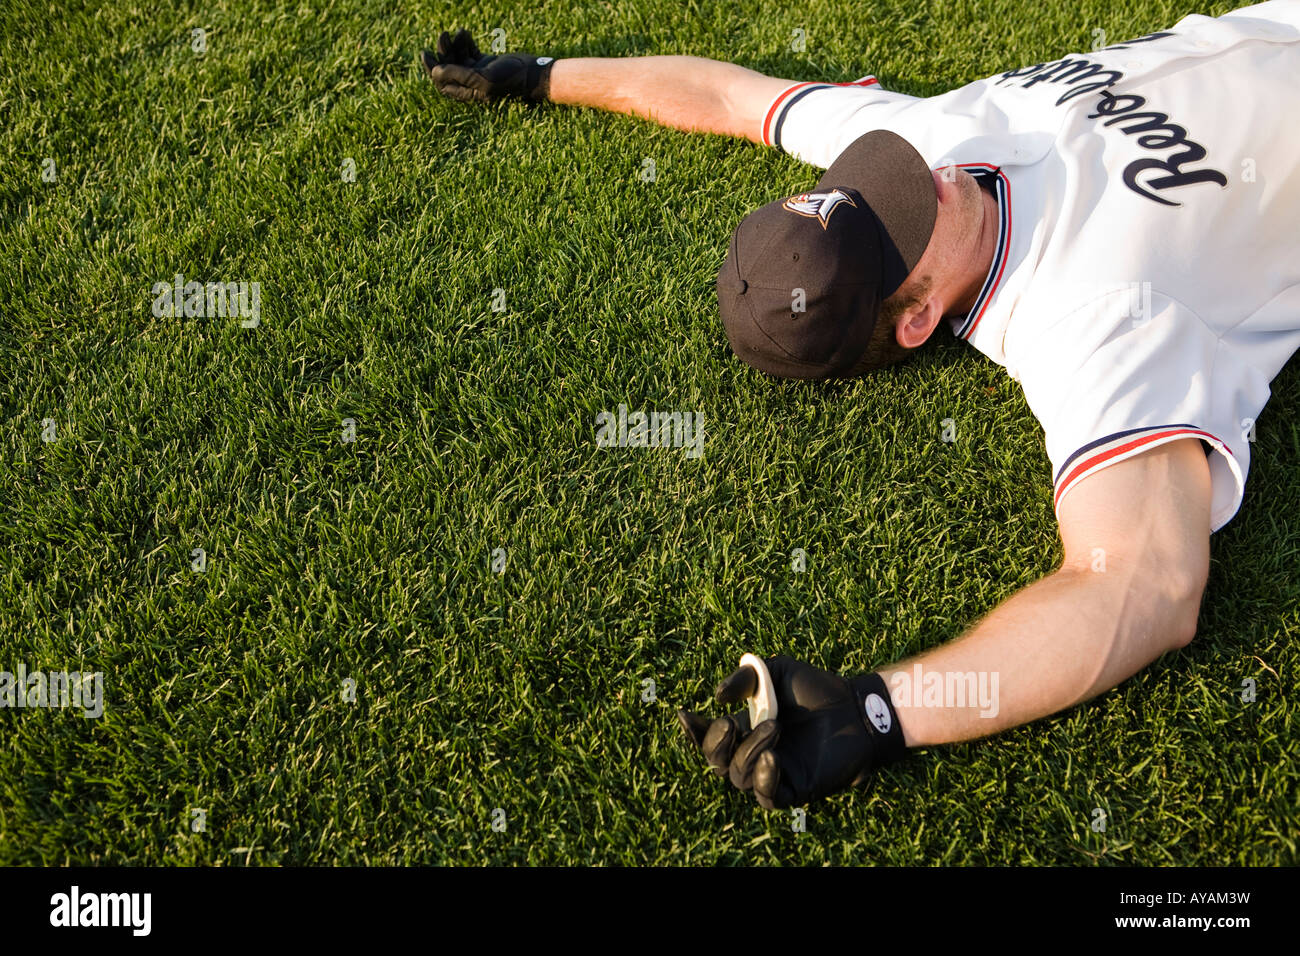 Baseball player stretching Stock Photo